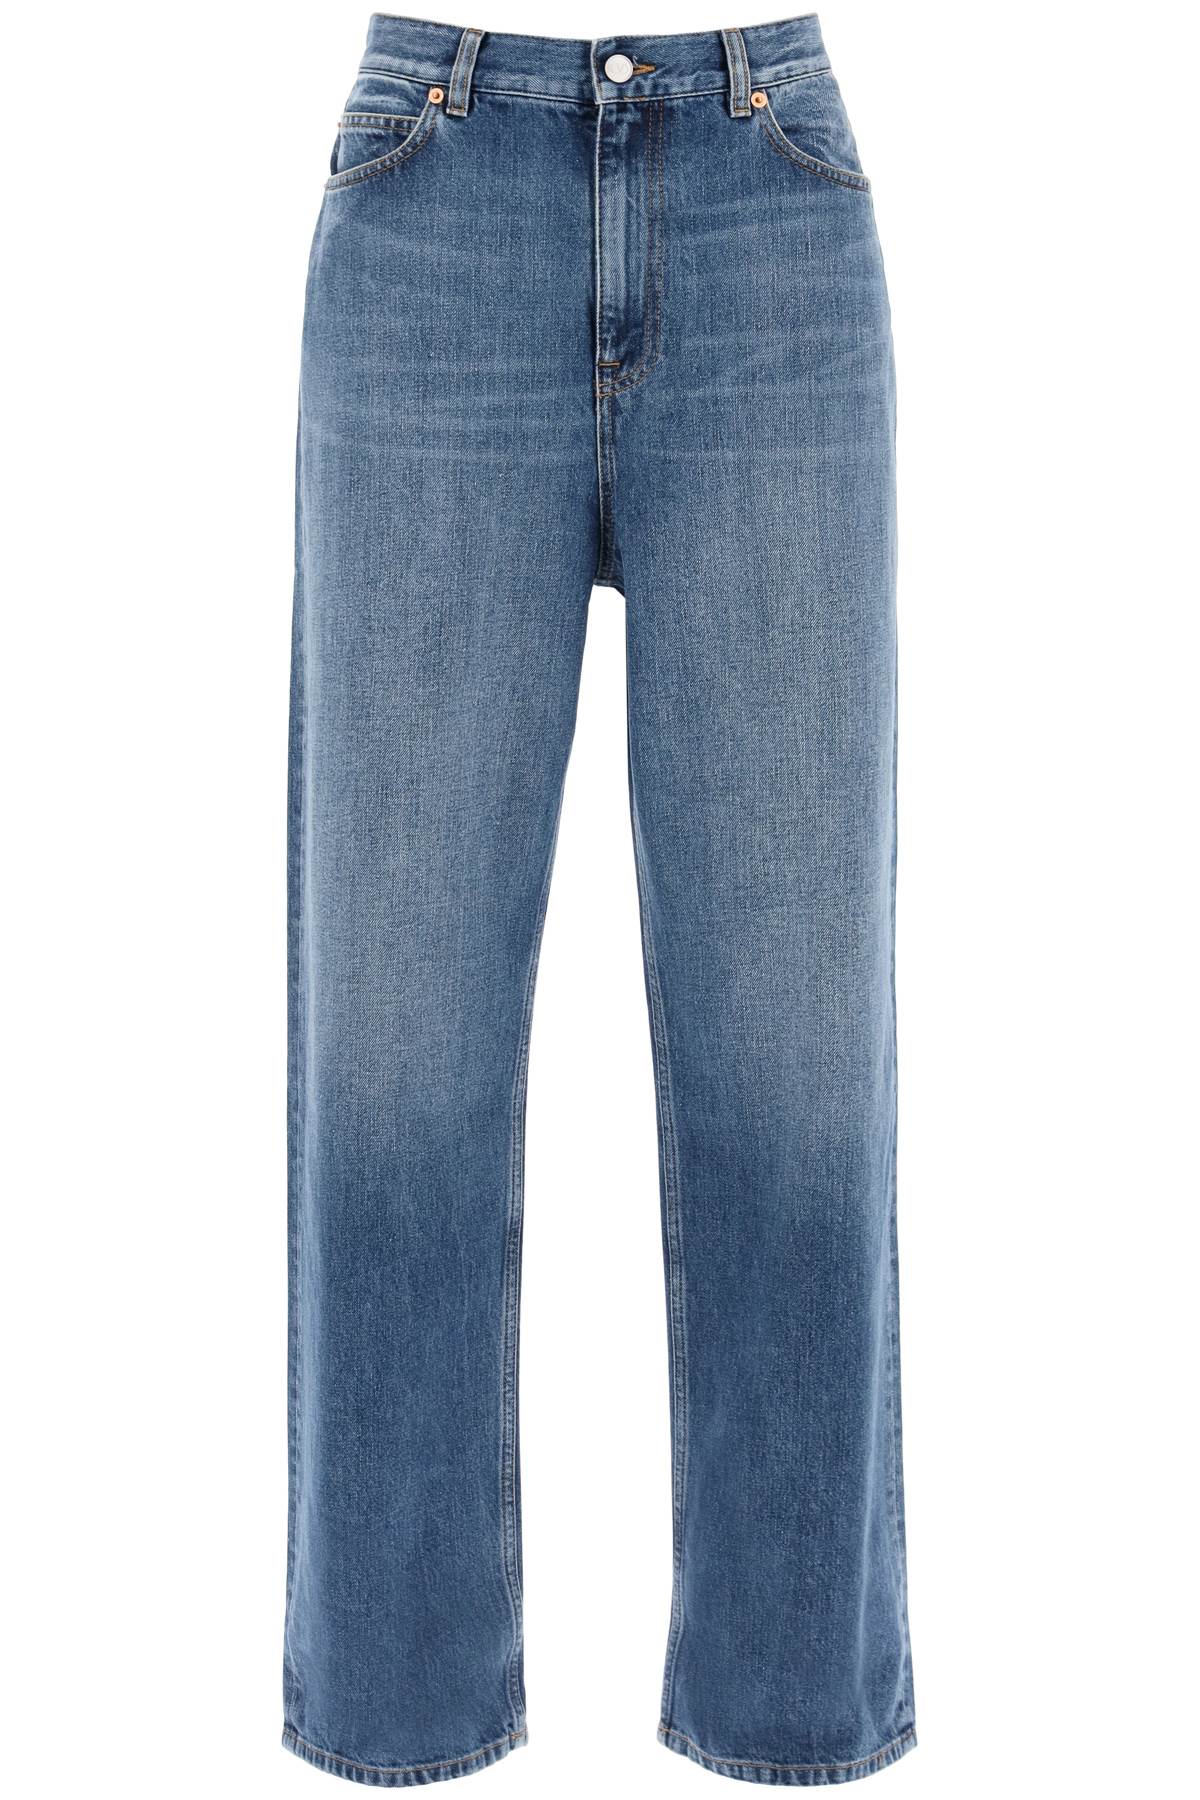 Valentino GARAVANI wide leg jeans - Blue